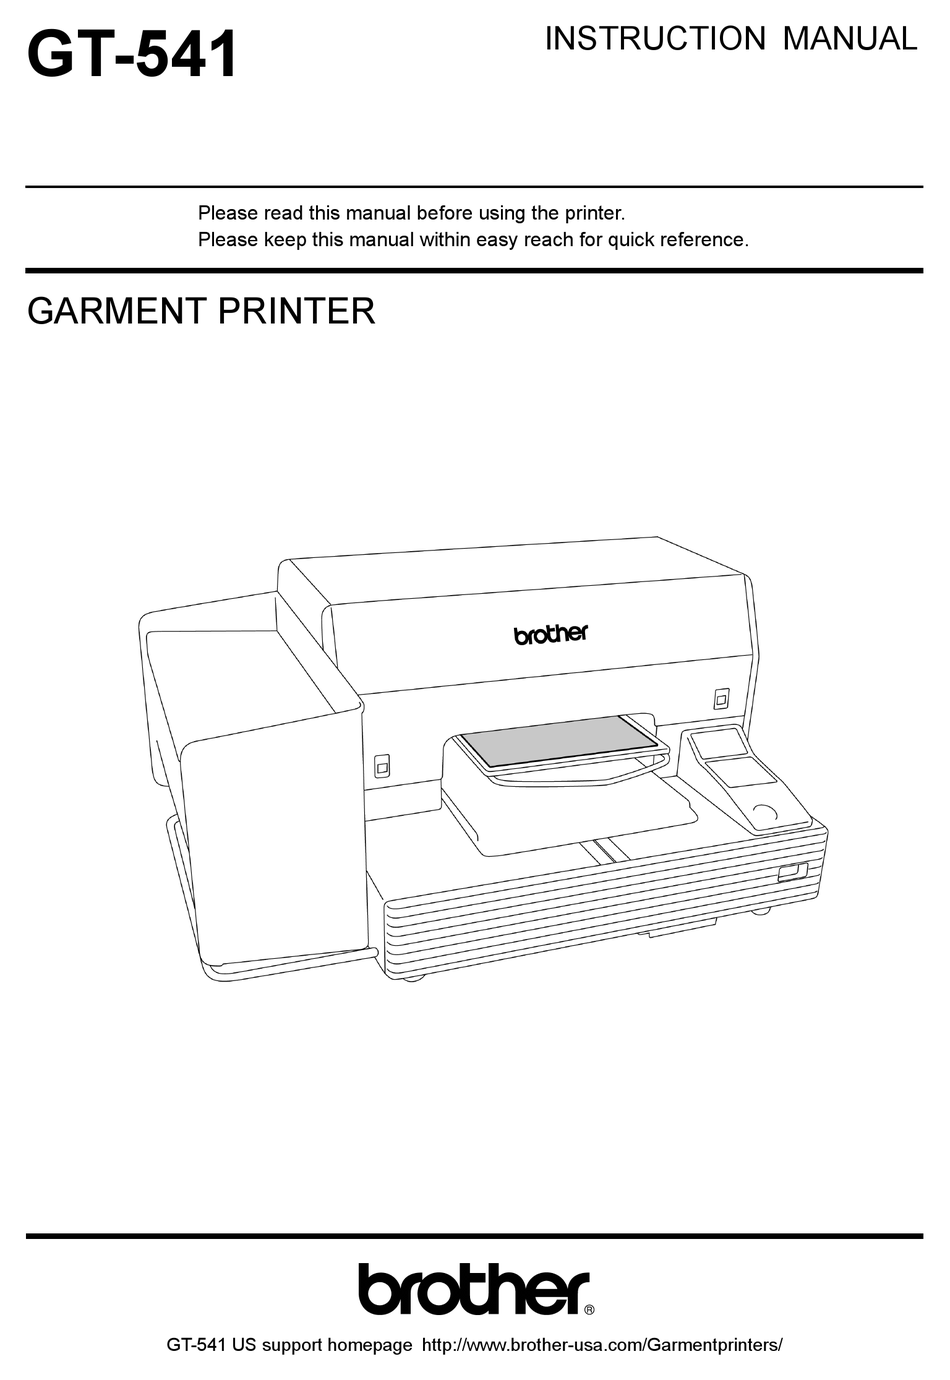 brother gt 541 garment printer